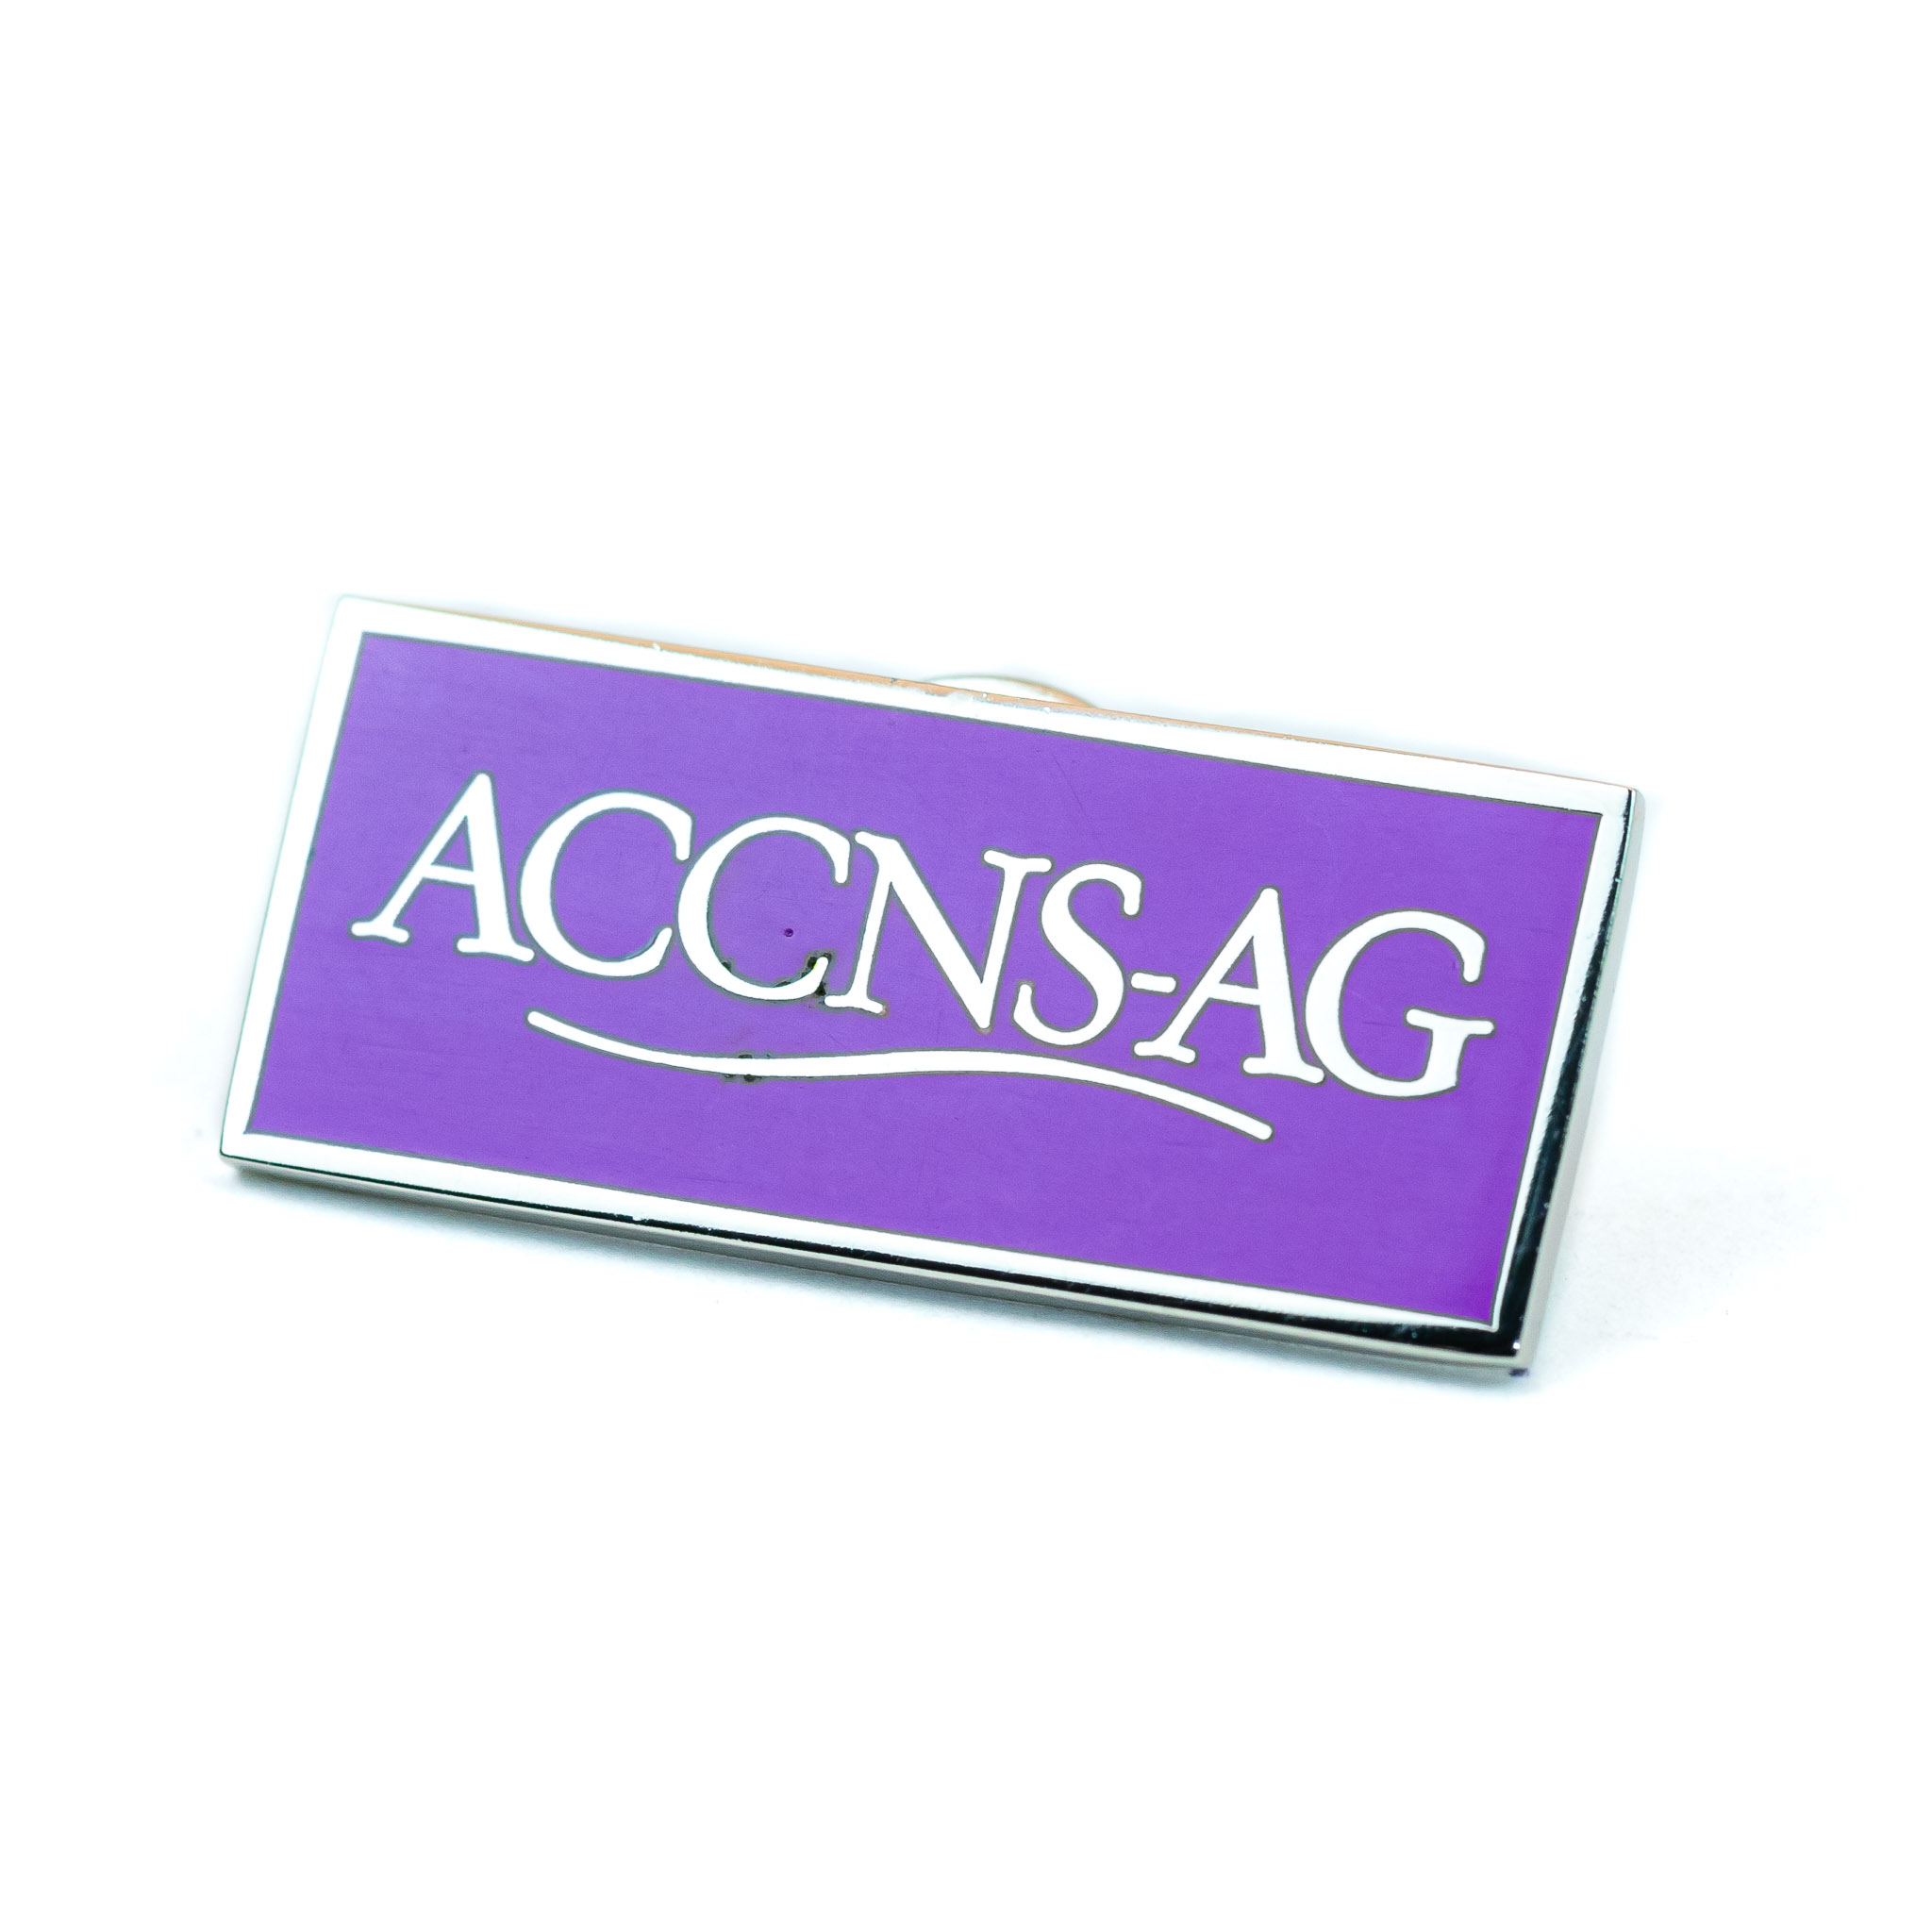 ACCNS-AG Lapel Pin